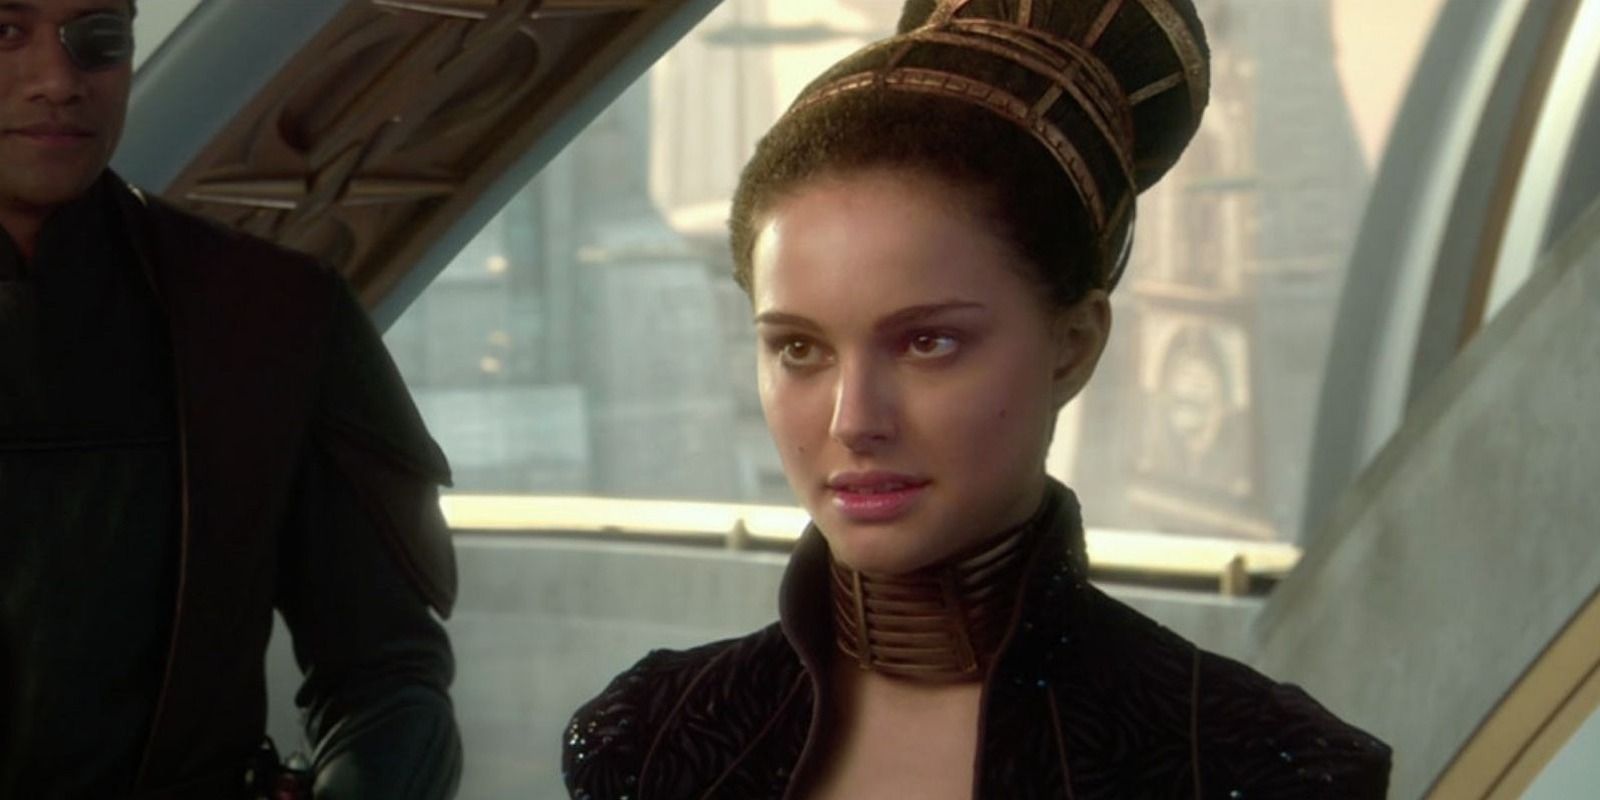 Padmé Amidala (Natalie Portman) in Star Wars Episode I: The Phantom Menace stands looking off-screen at someone.